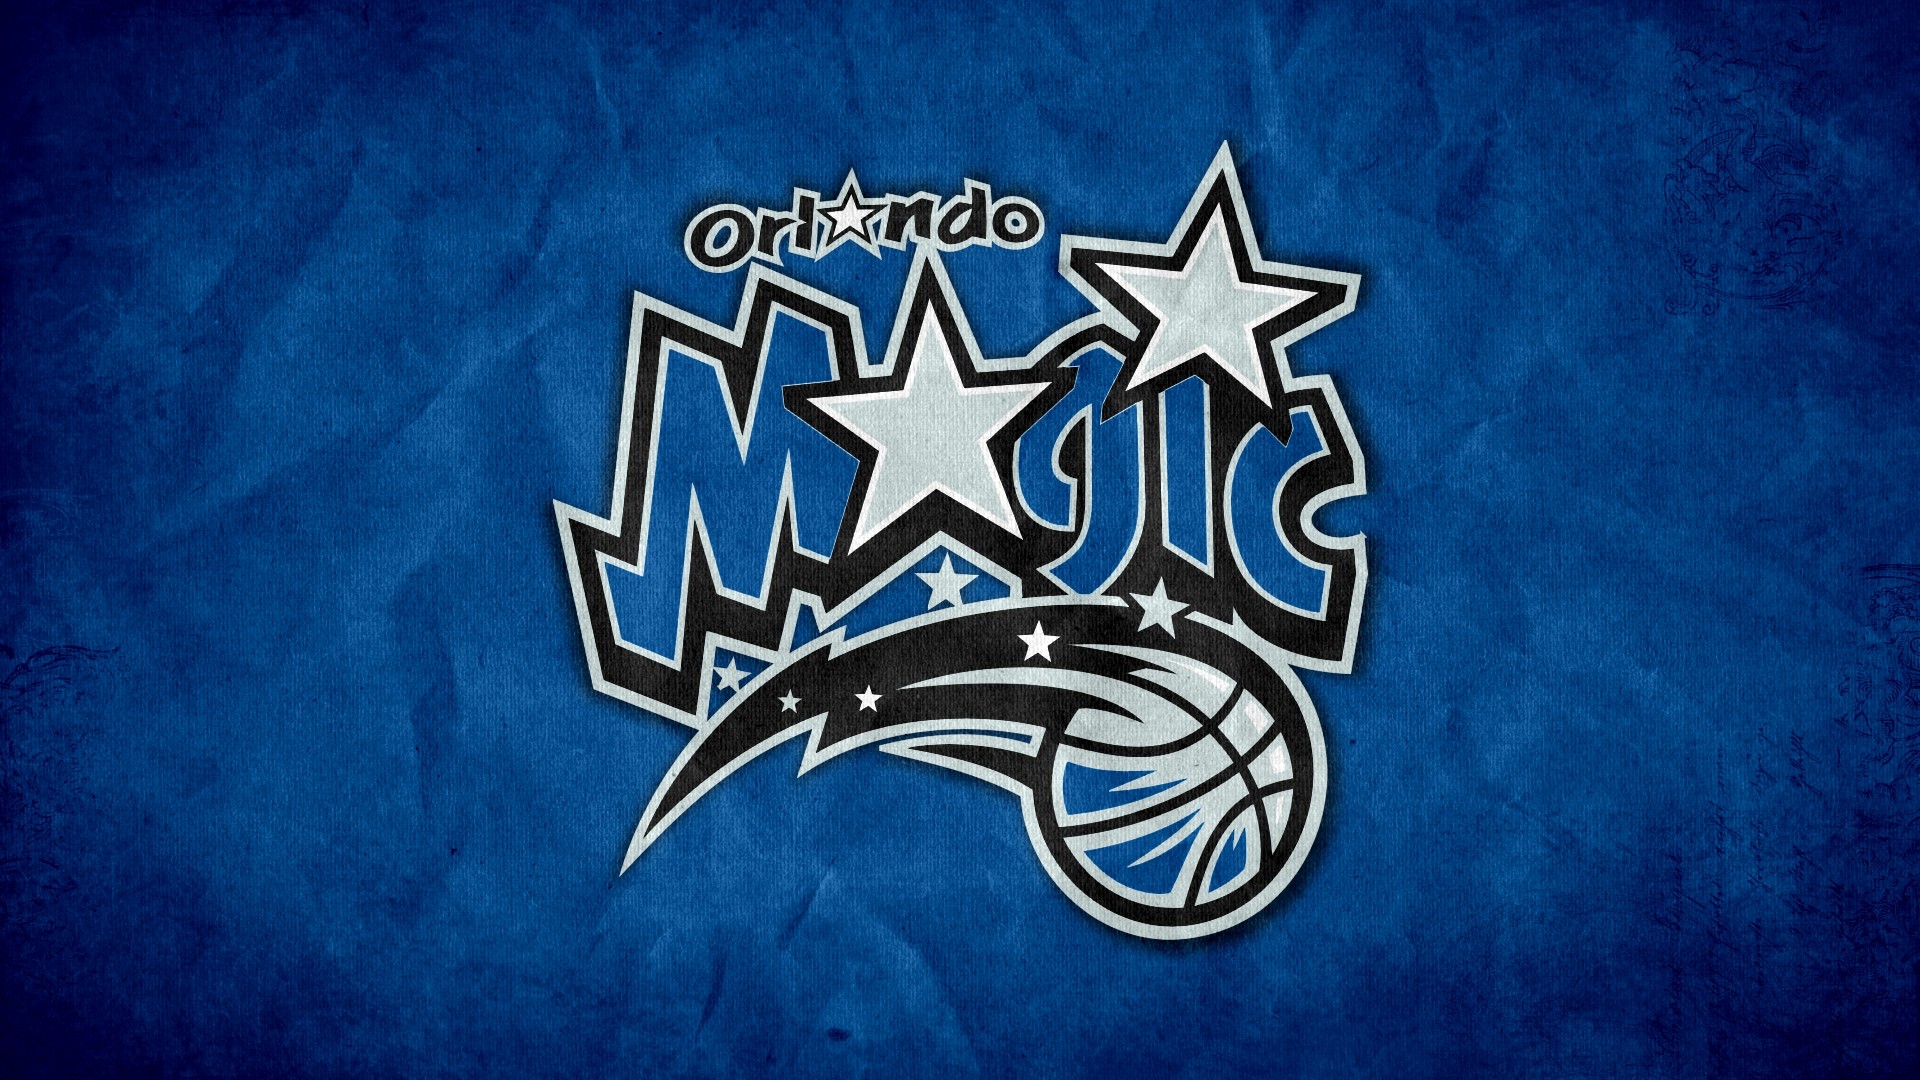 Orlando Magic news